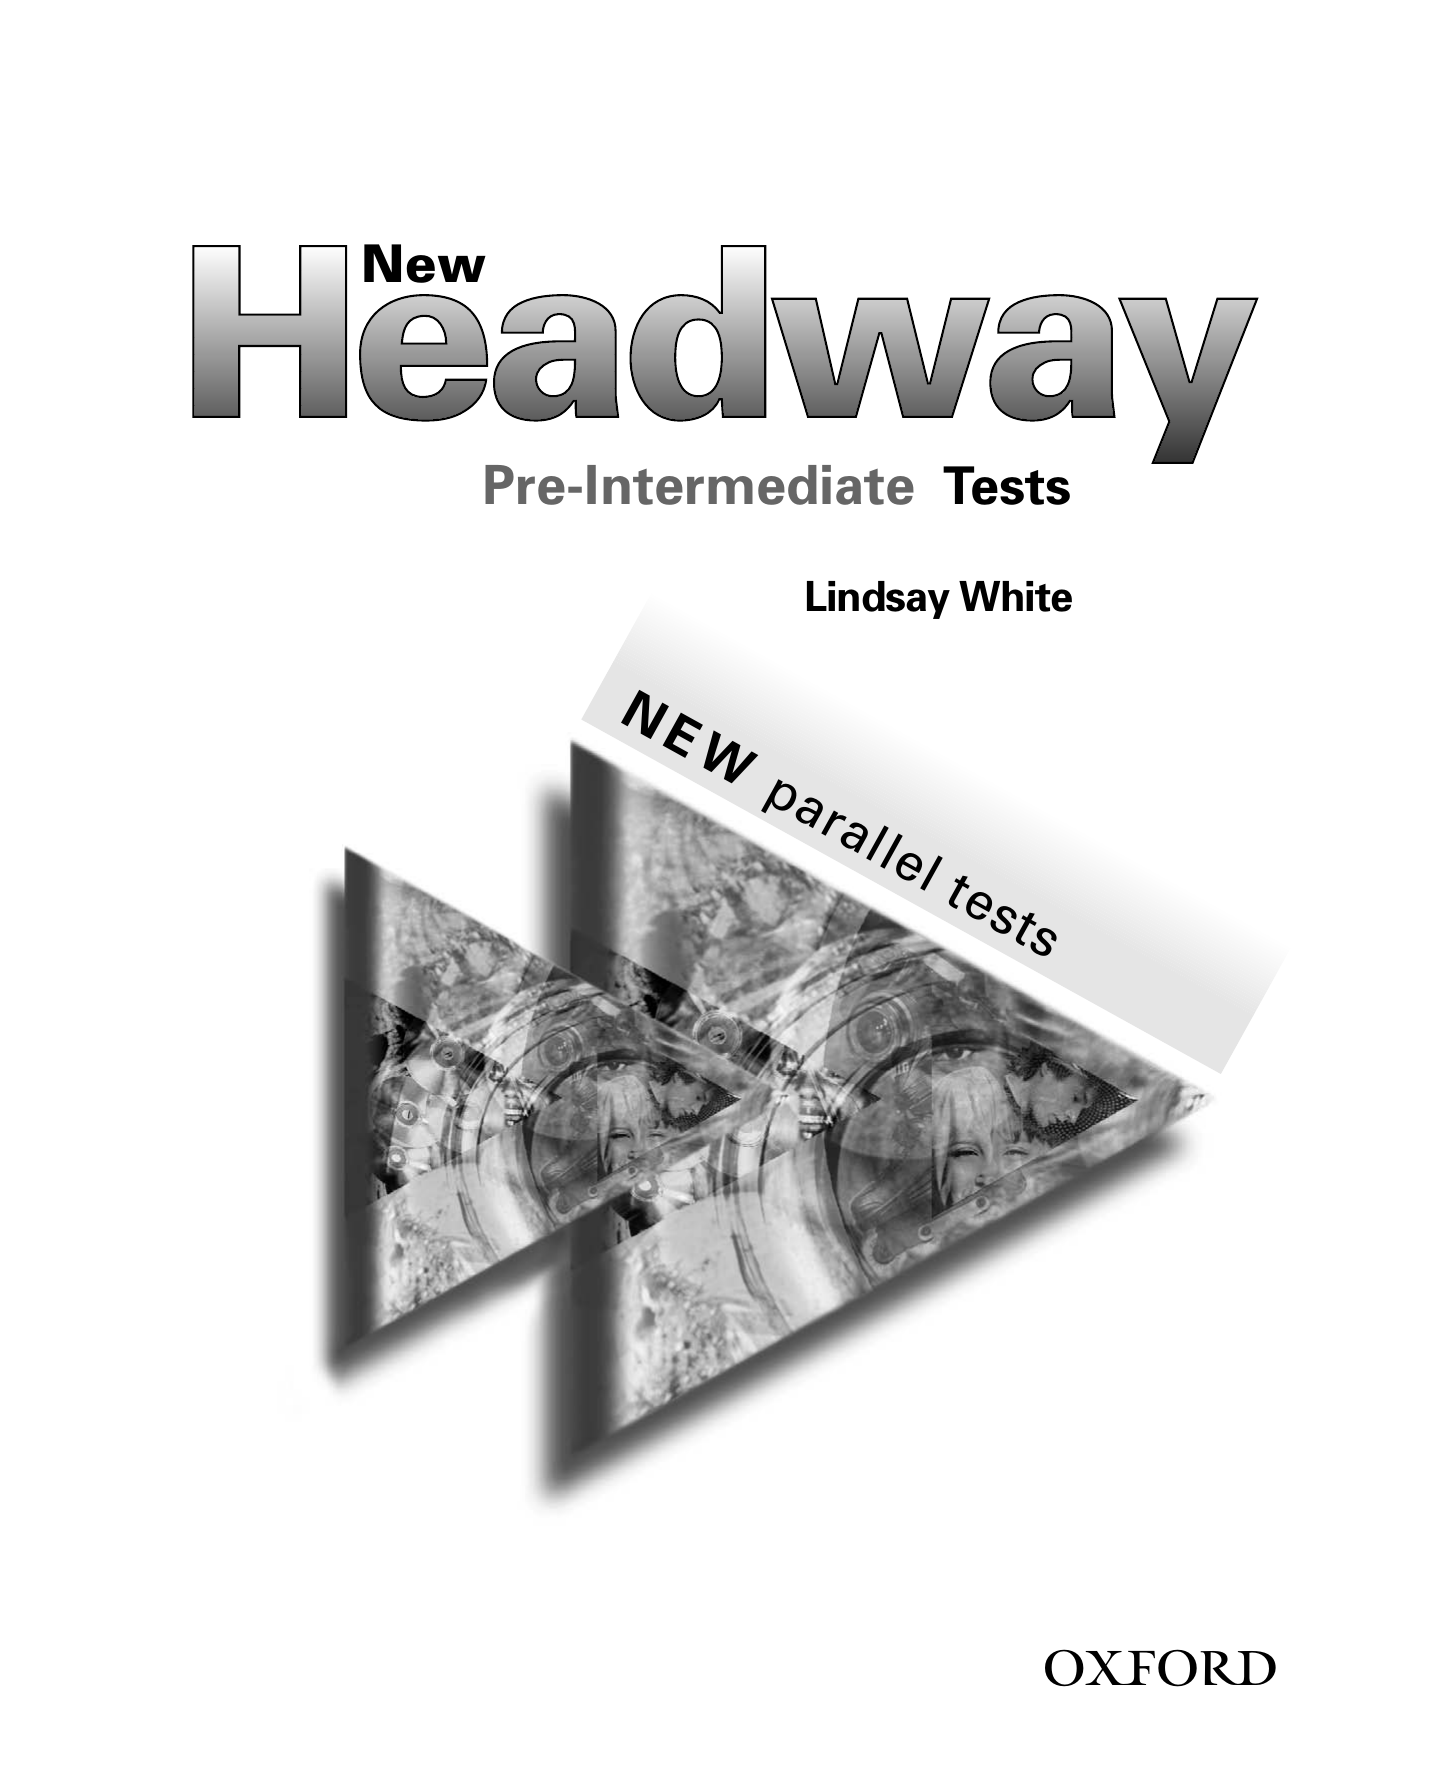 New headway intermediate book